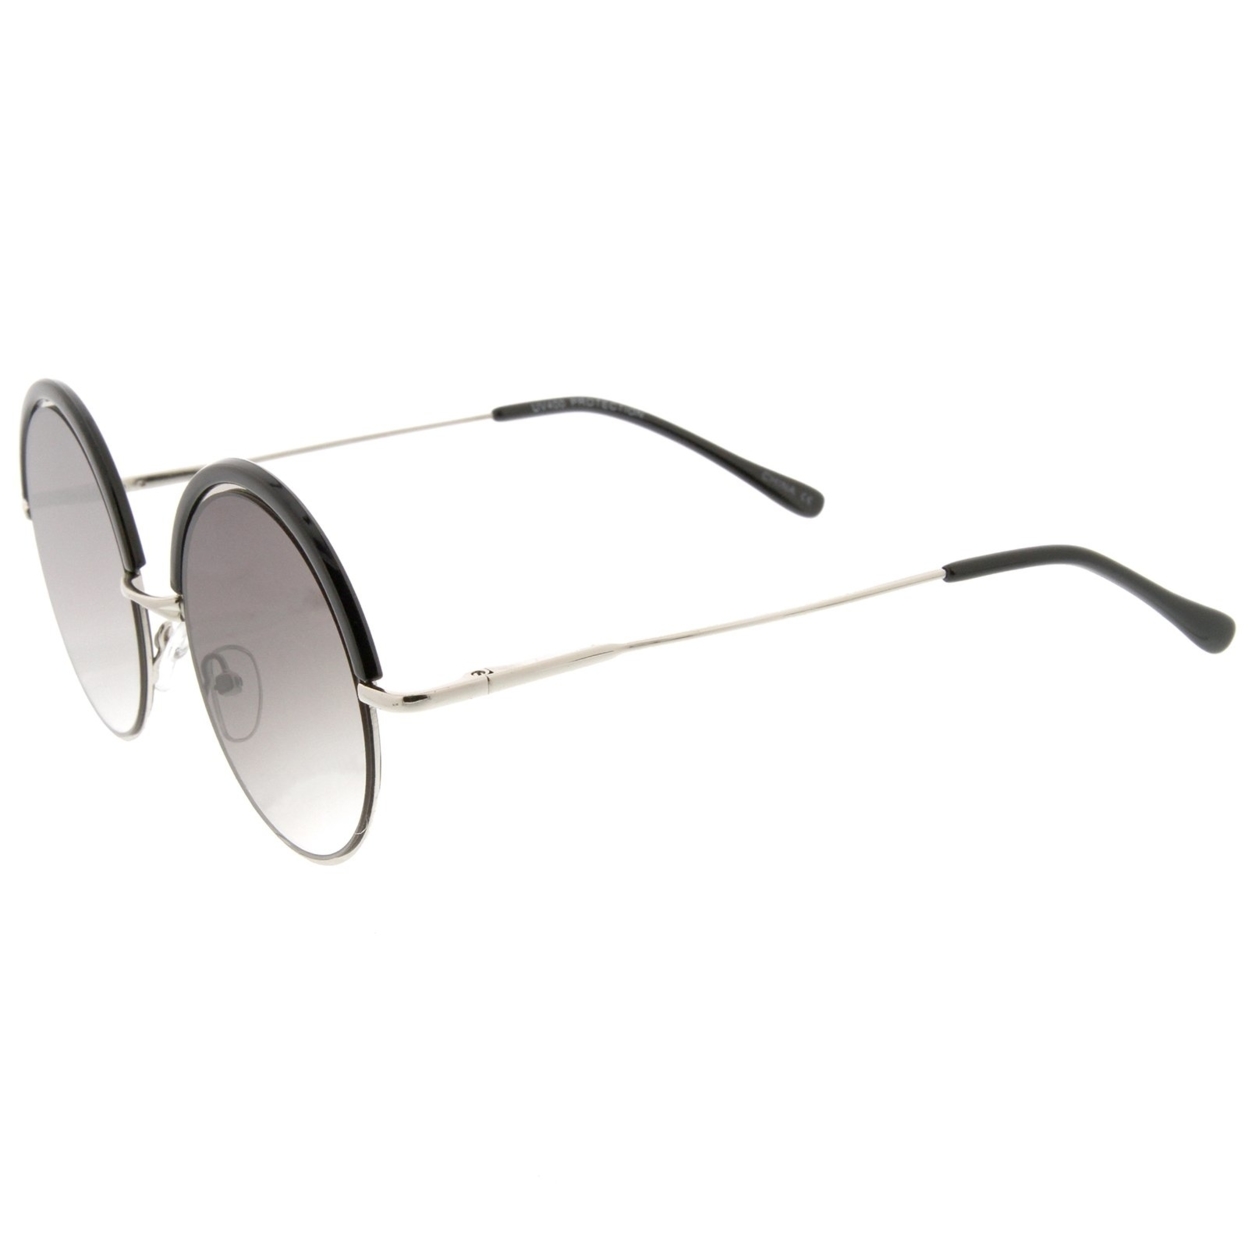 Retro Metal Frame Thin Temple Top Trim Flat Lens Round Sunglasses 51mm - Black-Silver / Lavender